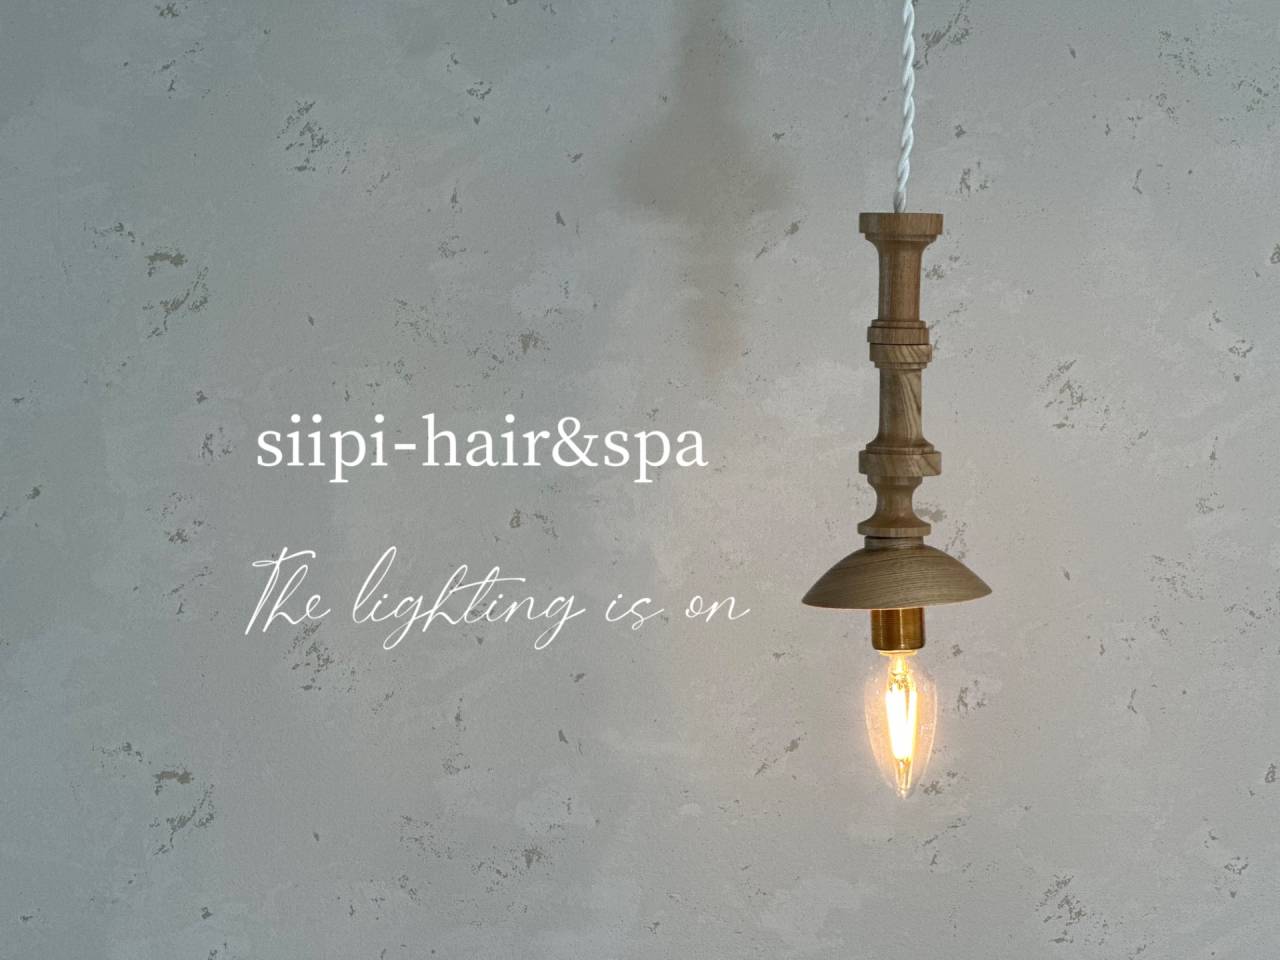 Siipi-hair&spa 様